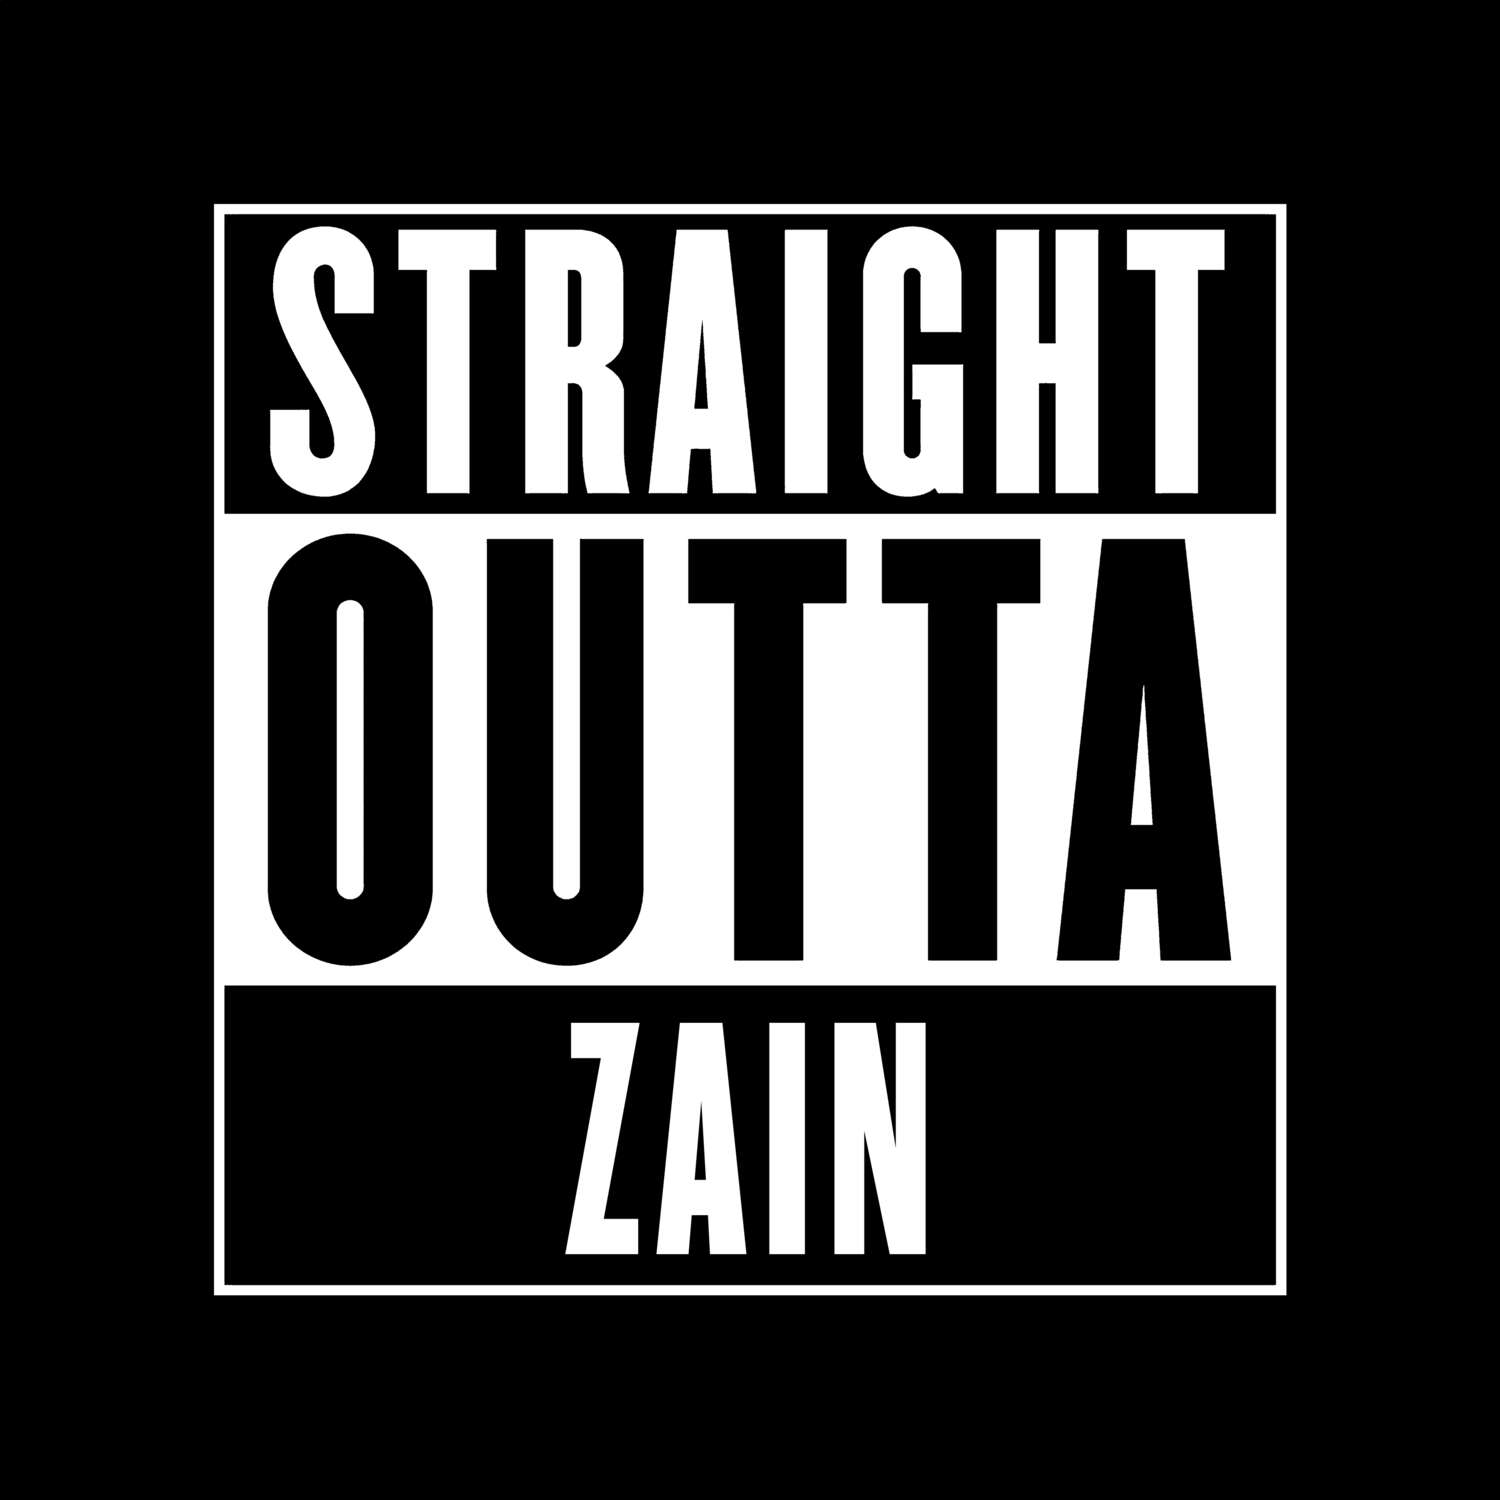 Zain T-Shirt »Straight Outta«